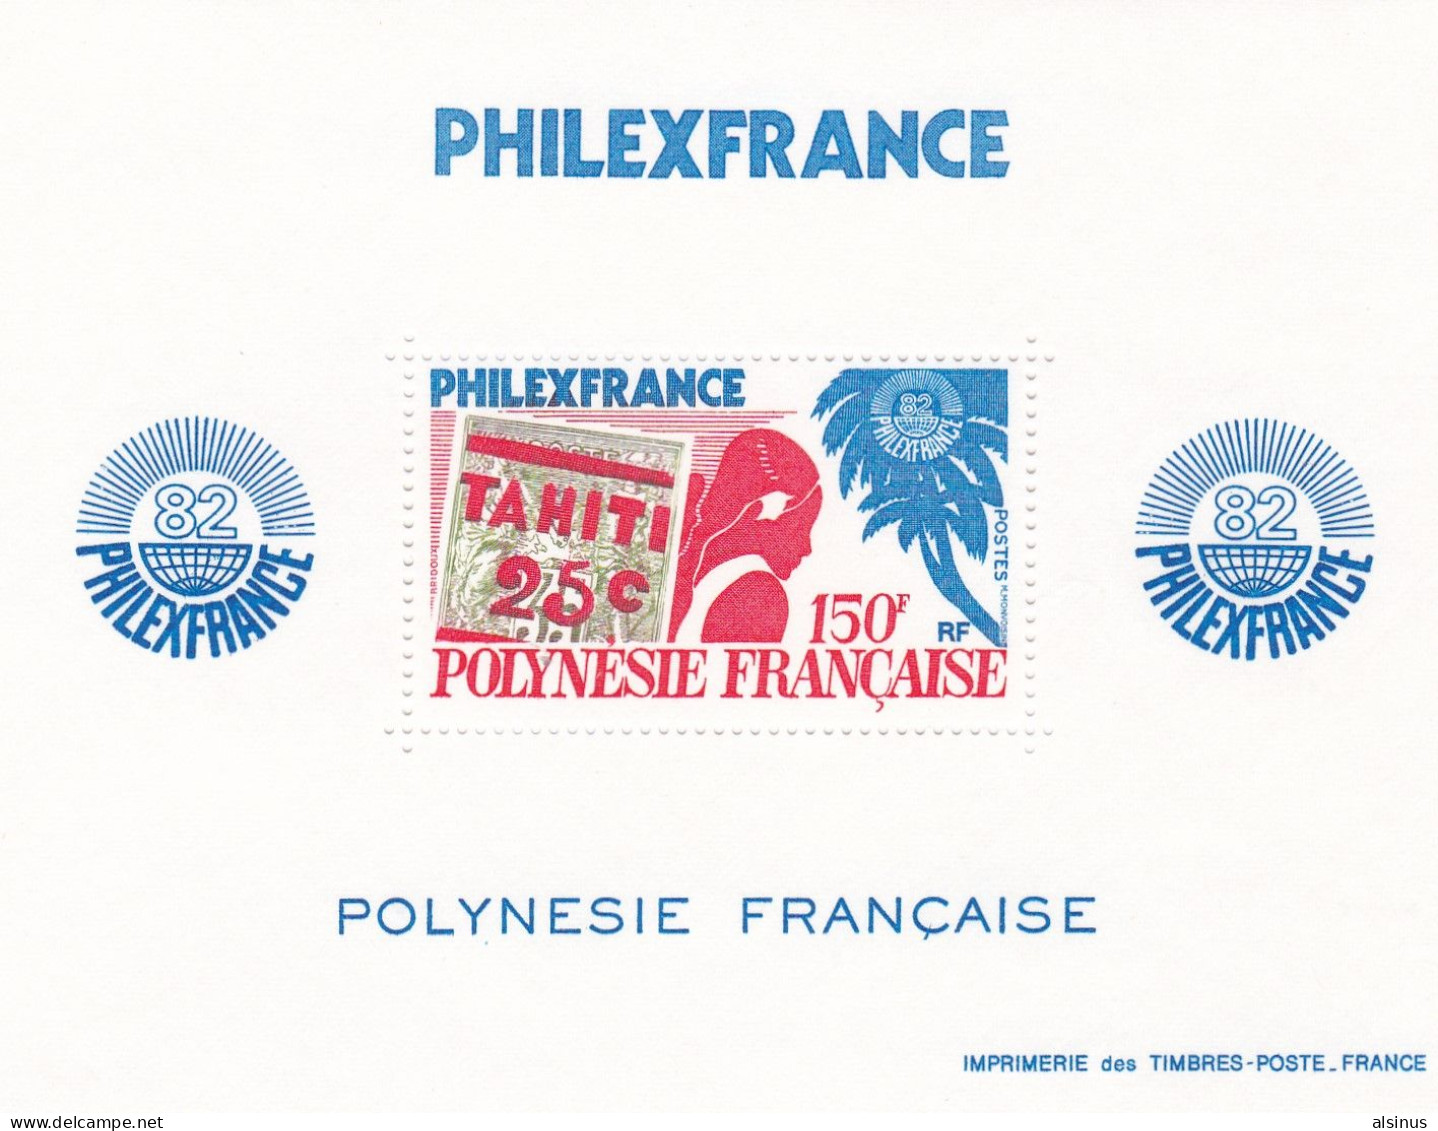 POLYNESIE FRANCAISE - 1982 - PHILEXFRANCE  - 150 F - FEUILLET - NEUF - Neufs